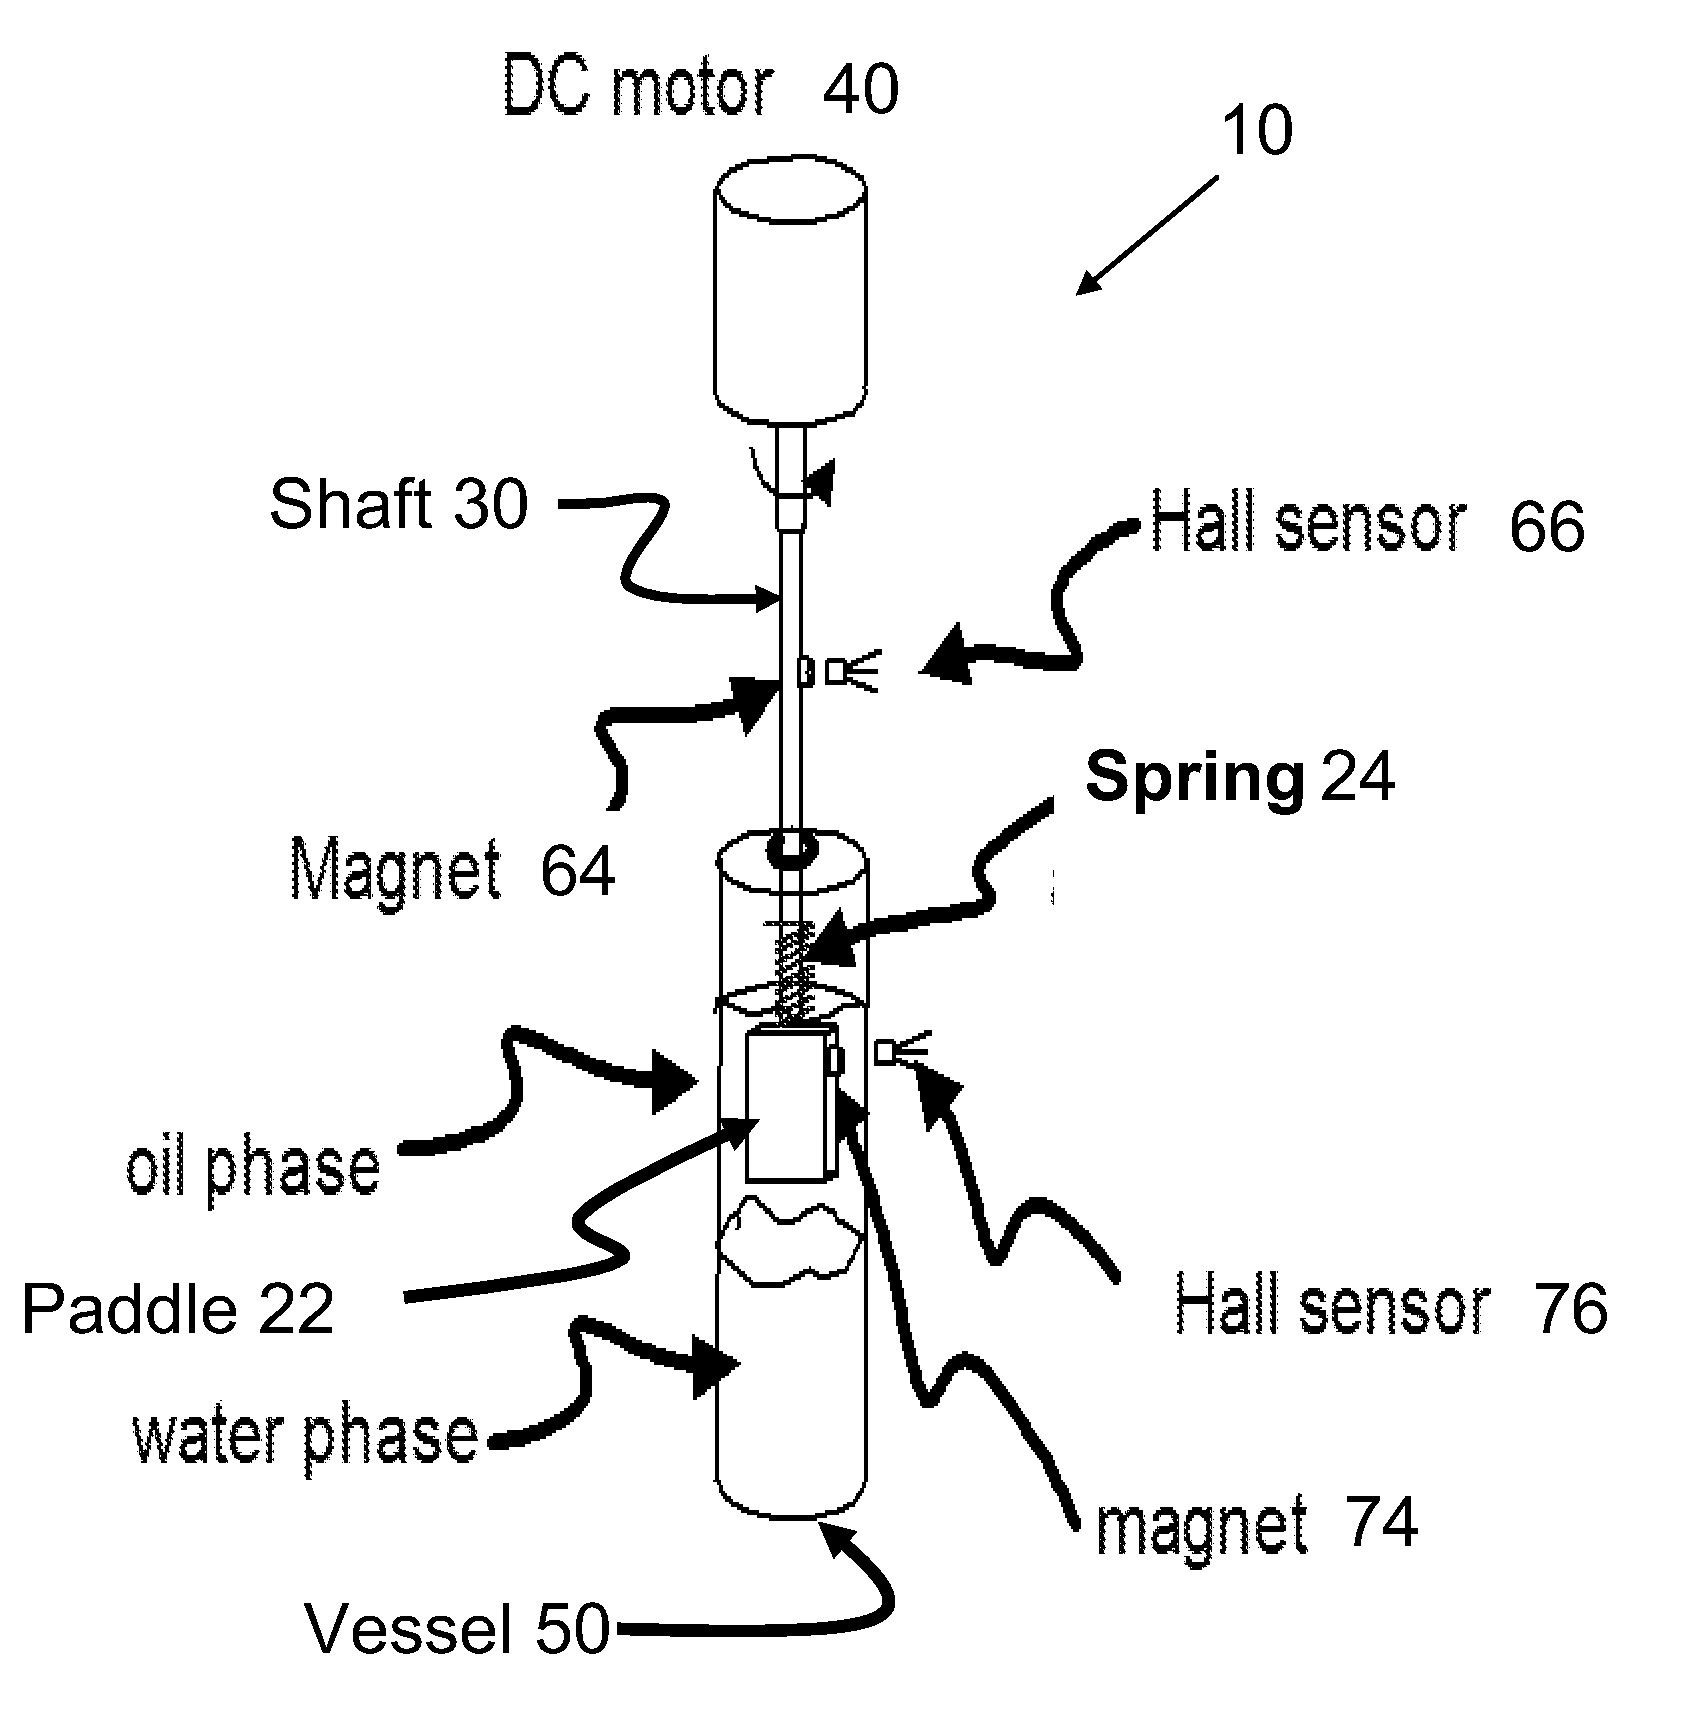 Apparatus for measurement of in-situ viscosity